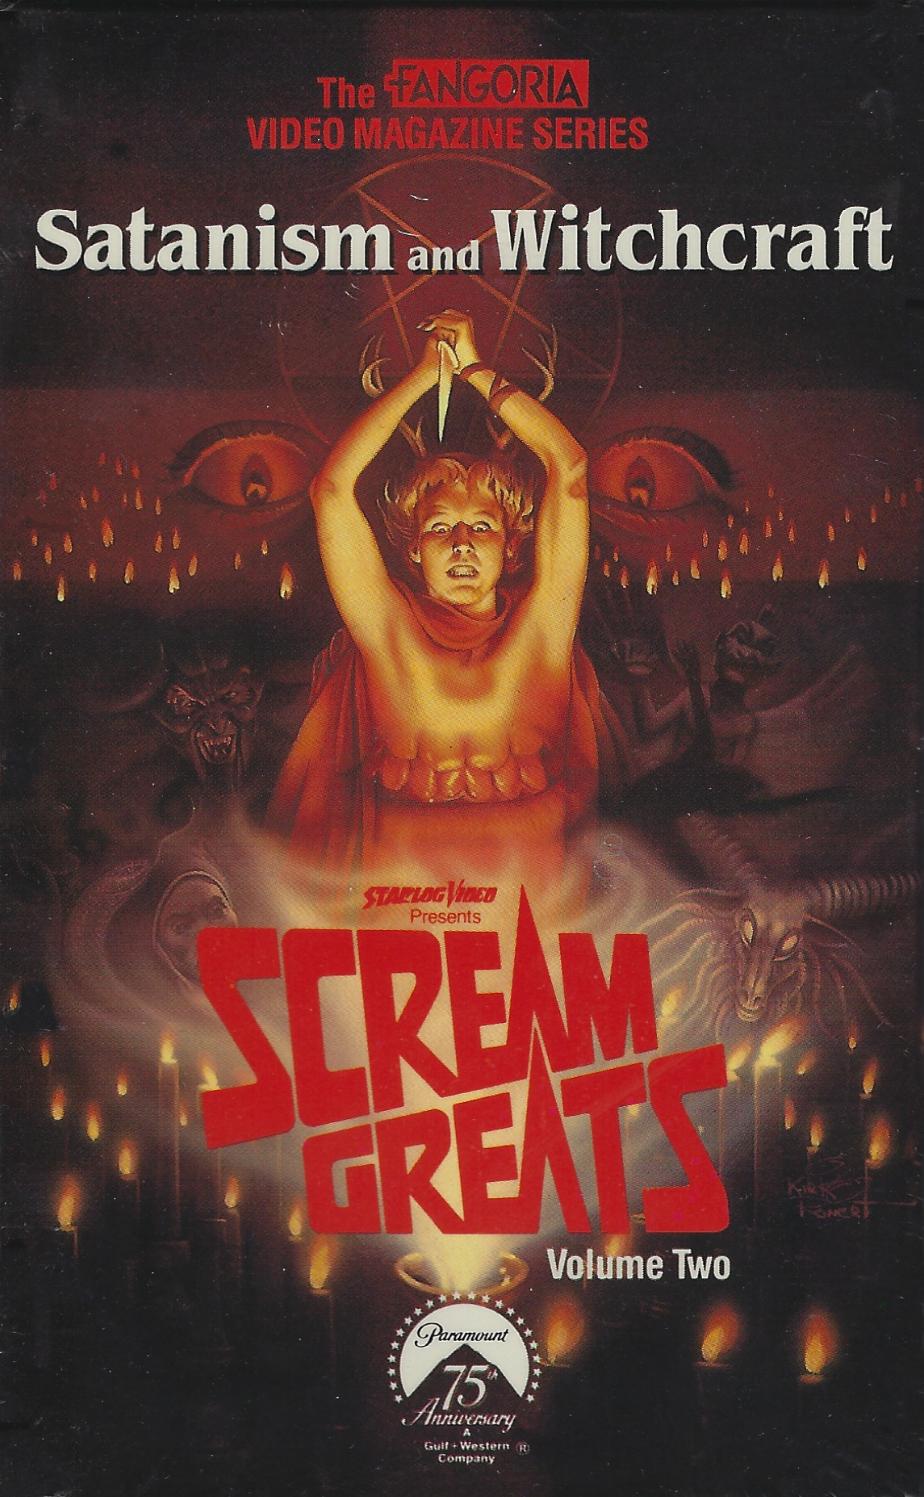 Scream Greats, Vol. 2: Satanism and Witchcraft (1986) Screenshot 2